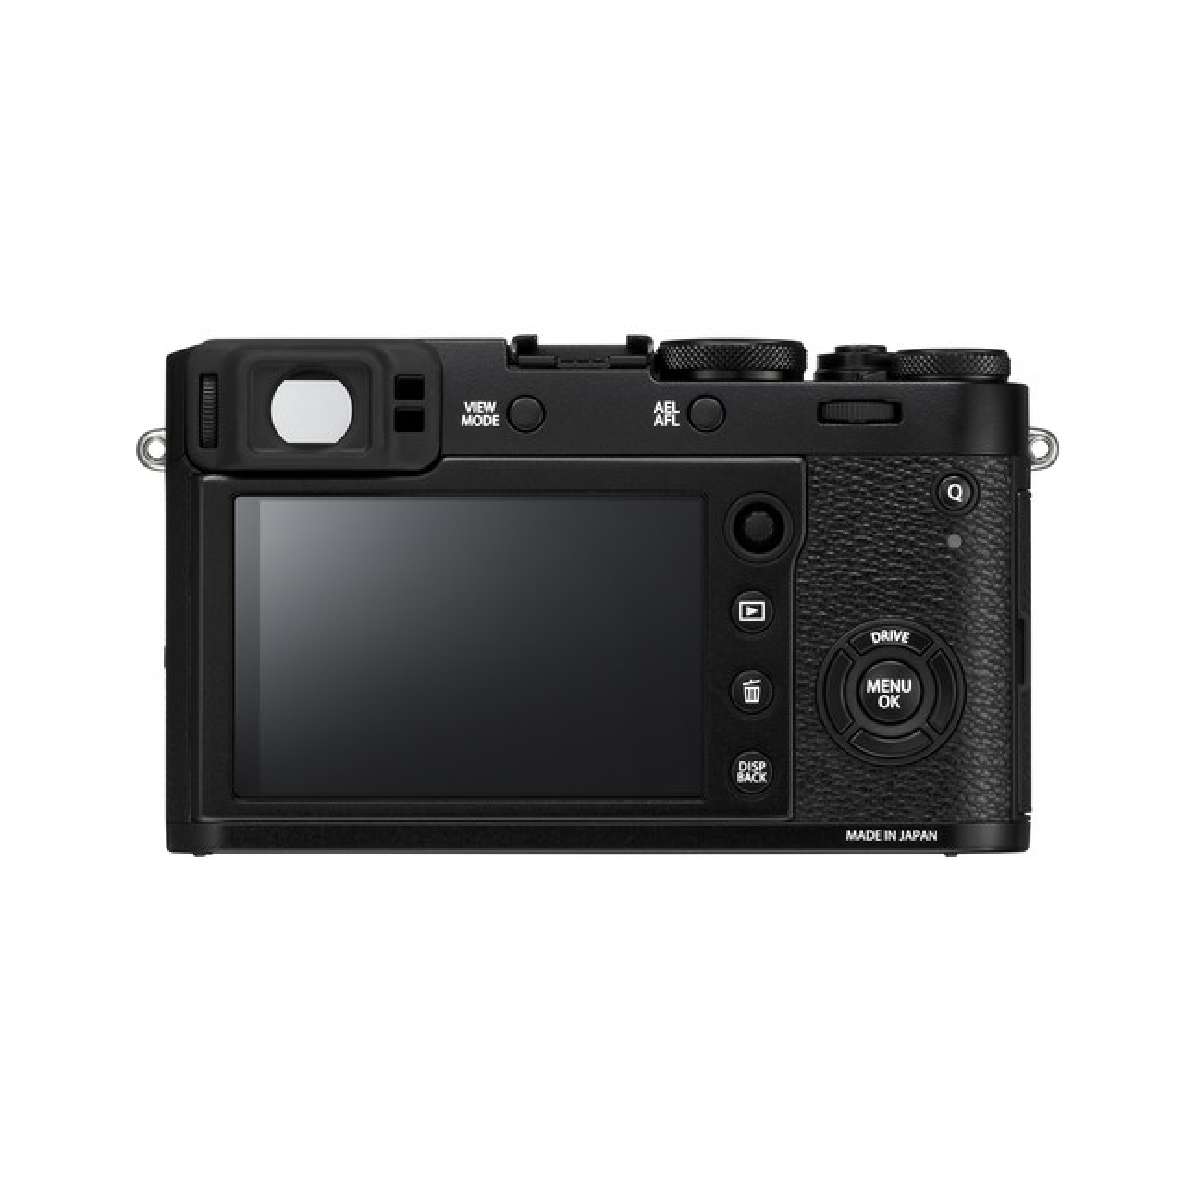 Fujifilm X100F Digital Camera Black